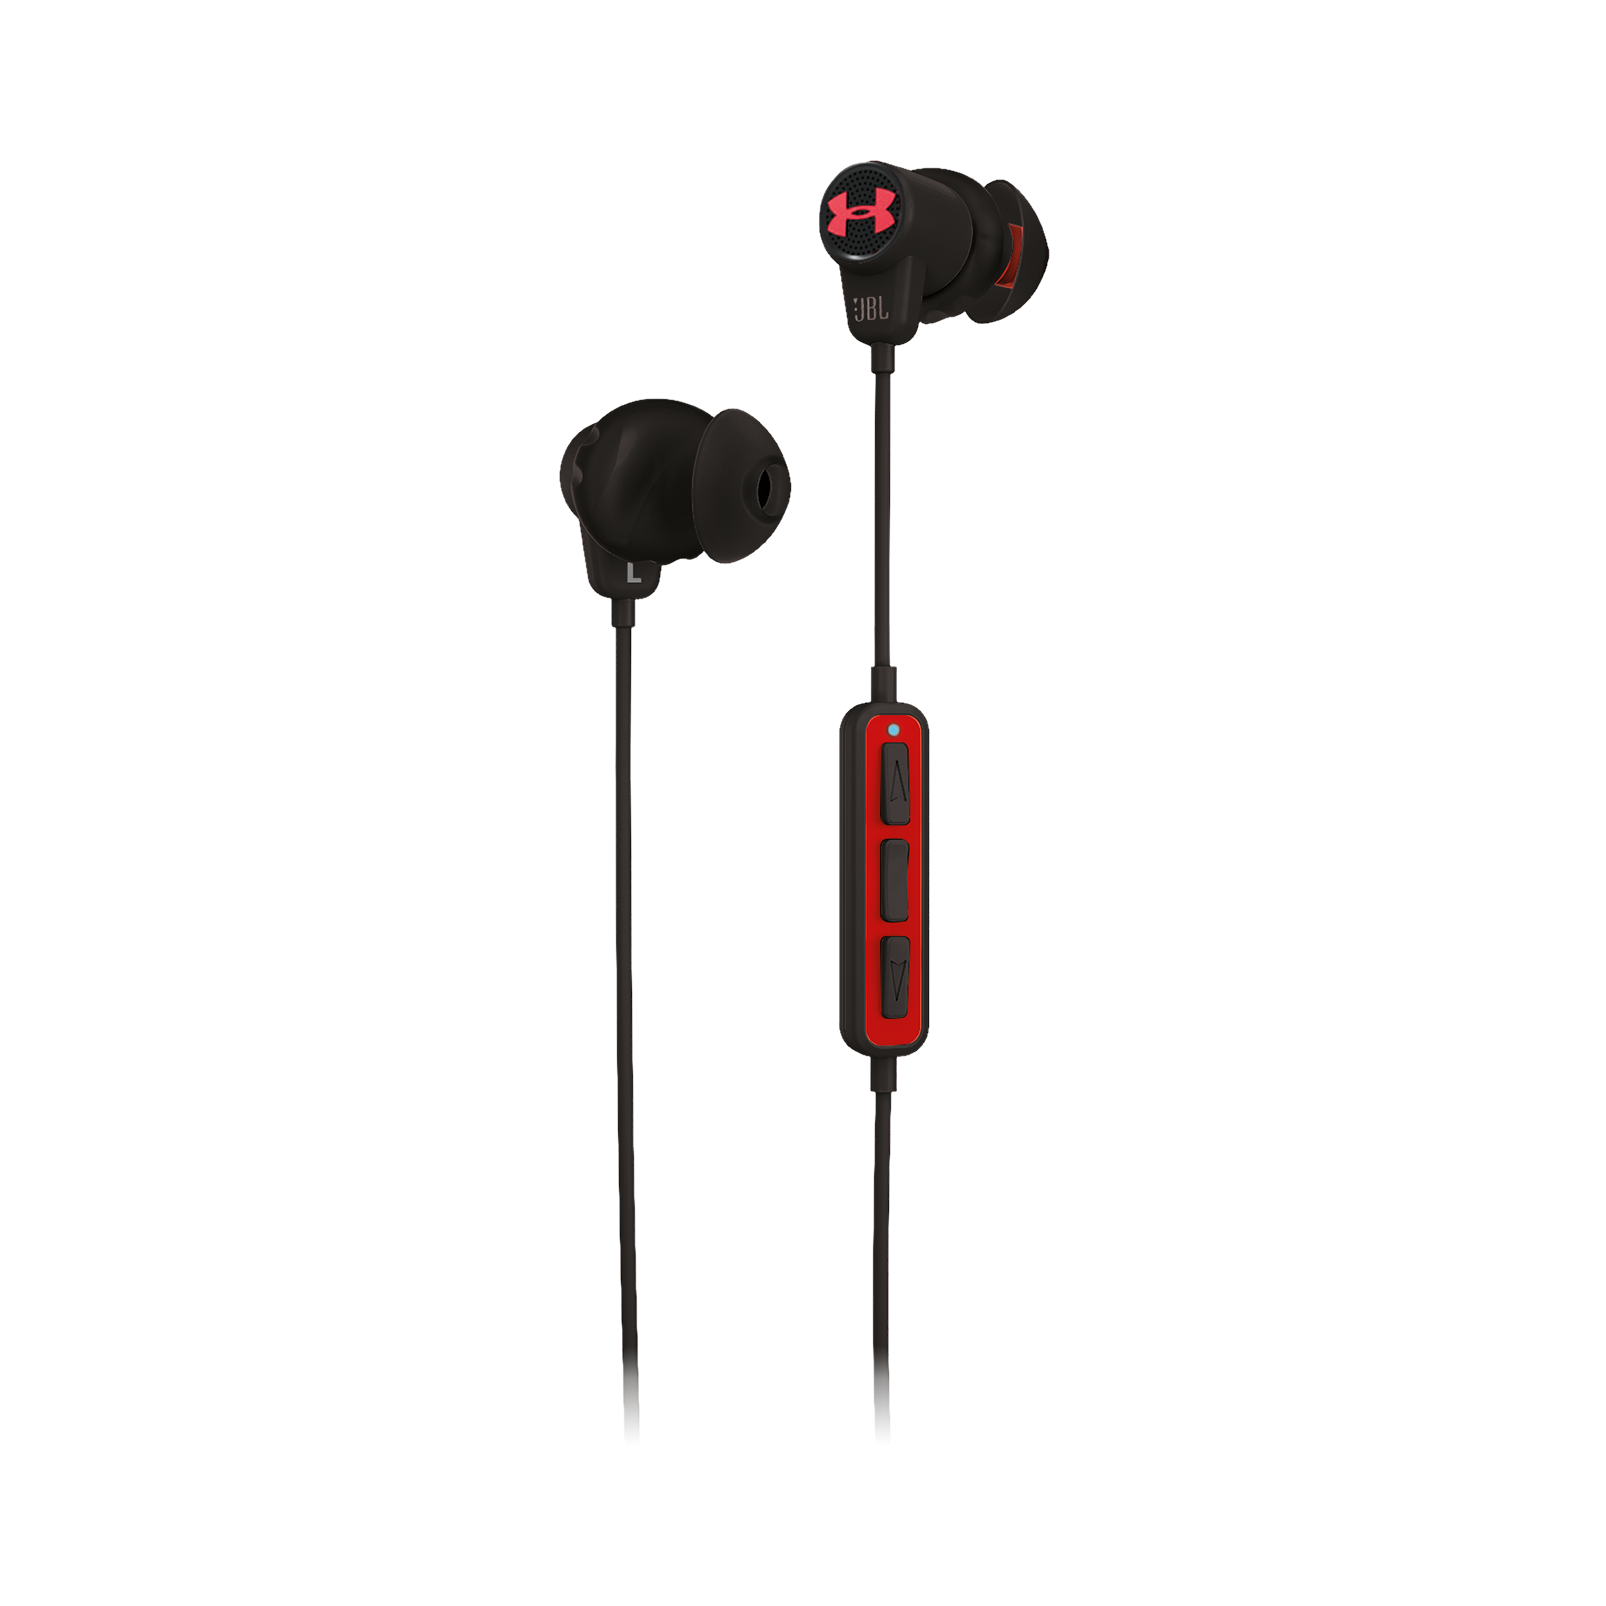 Under Armour Sport Wireless - Black - Wireless in-ear headphones for athletes - Detailshot 2